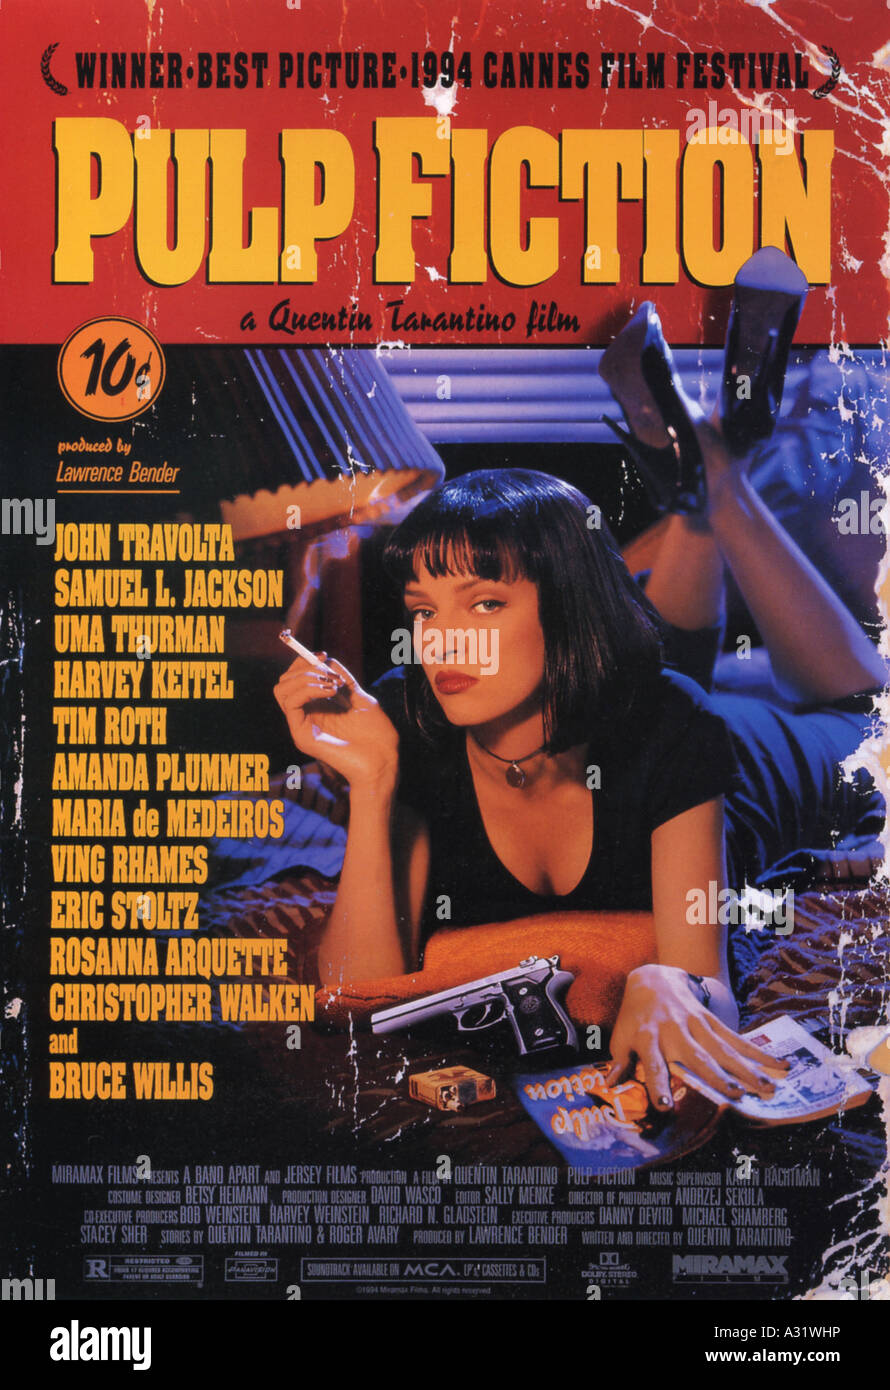 PULP FICTION poster de 1994 Buena Vista/Miramax film con Uma Thurman dirigido por Quentin Tarantino Foto de stock